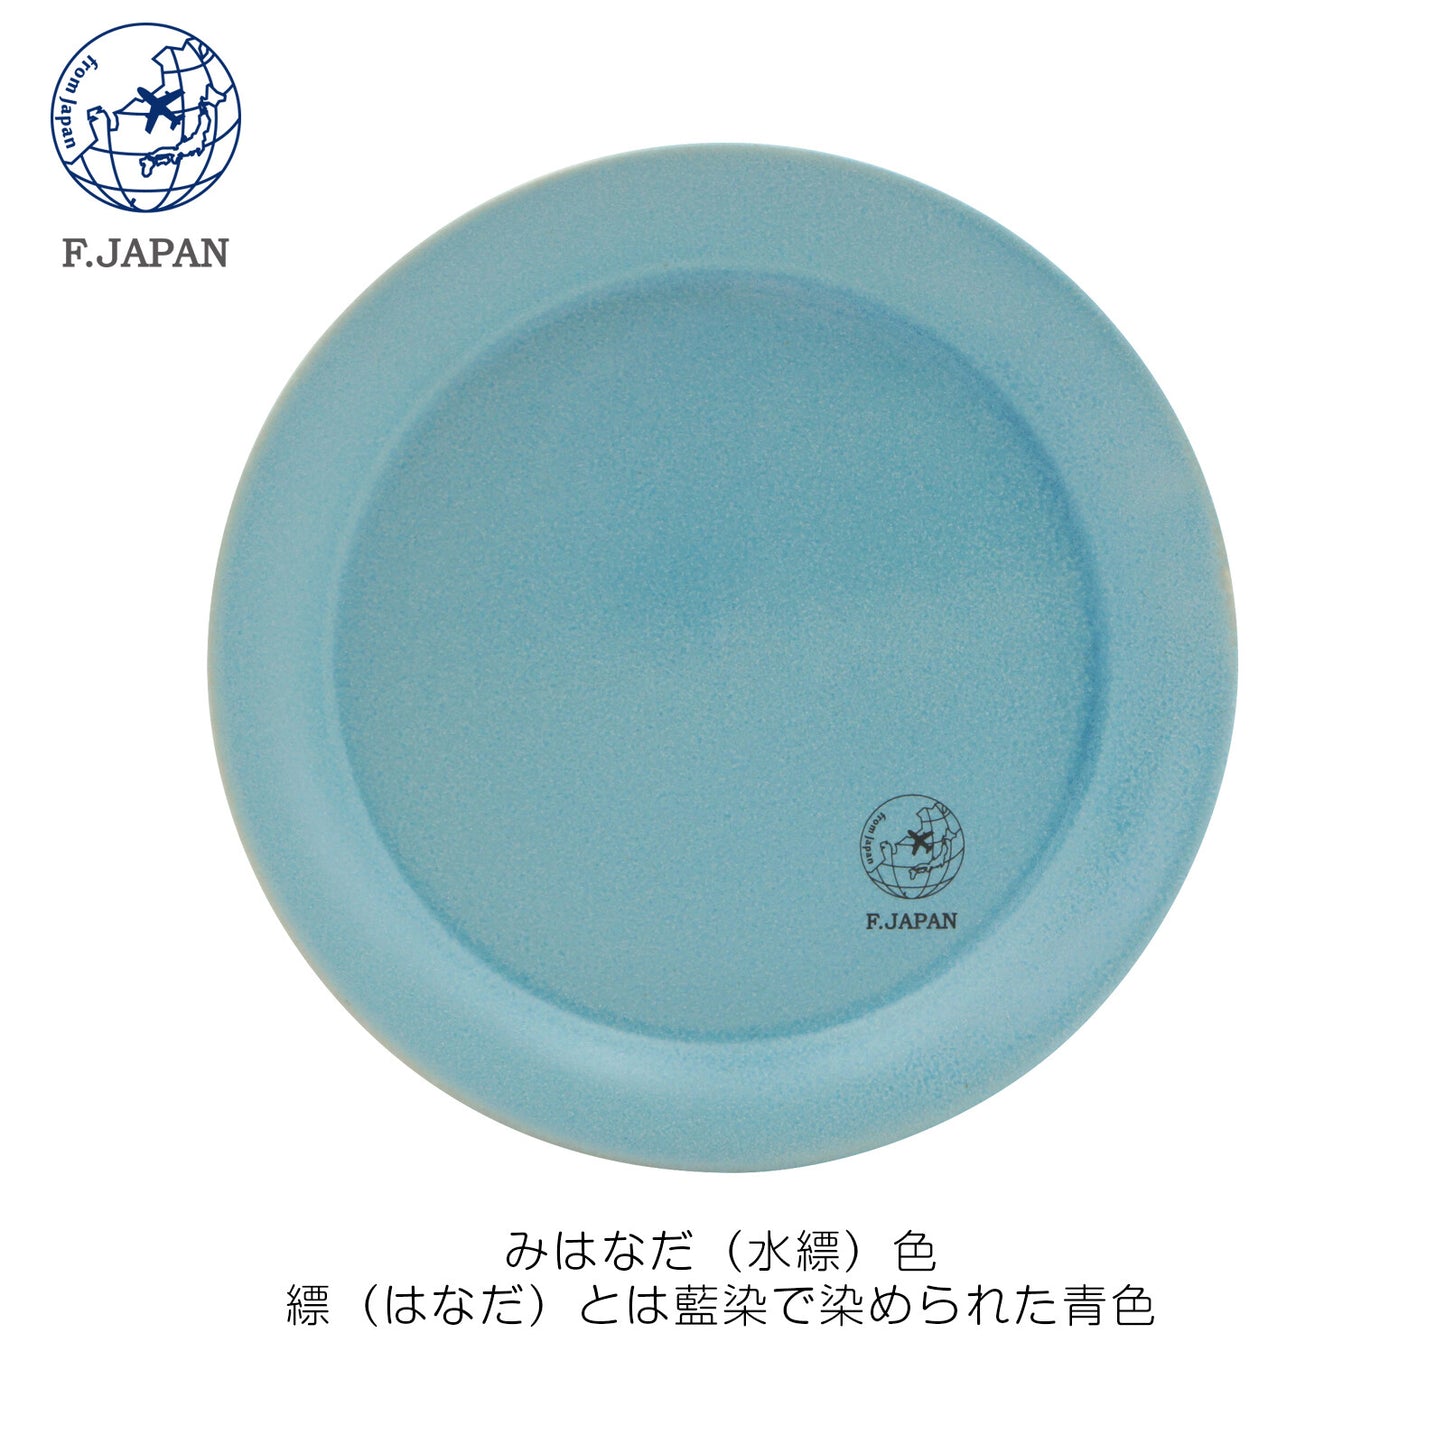 F.JAPAN Mino Yaki and Color Ceramic Plate